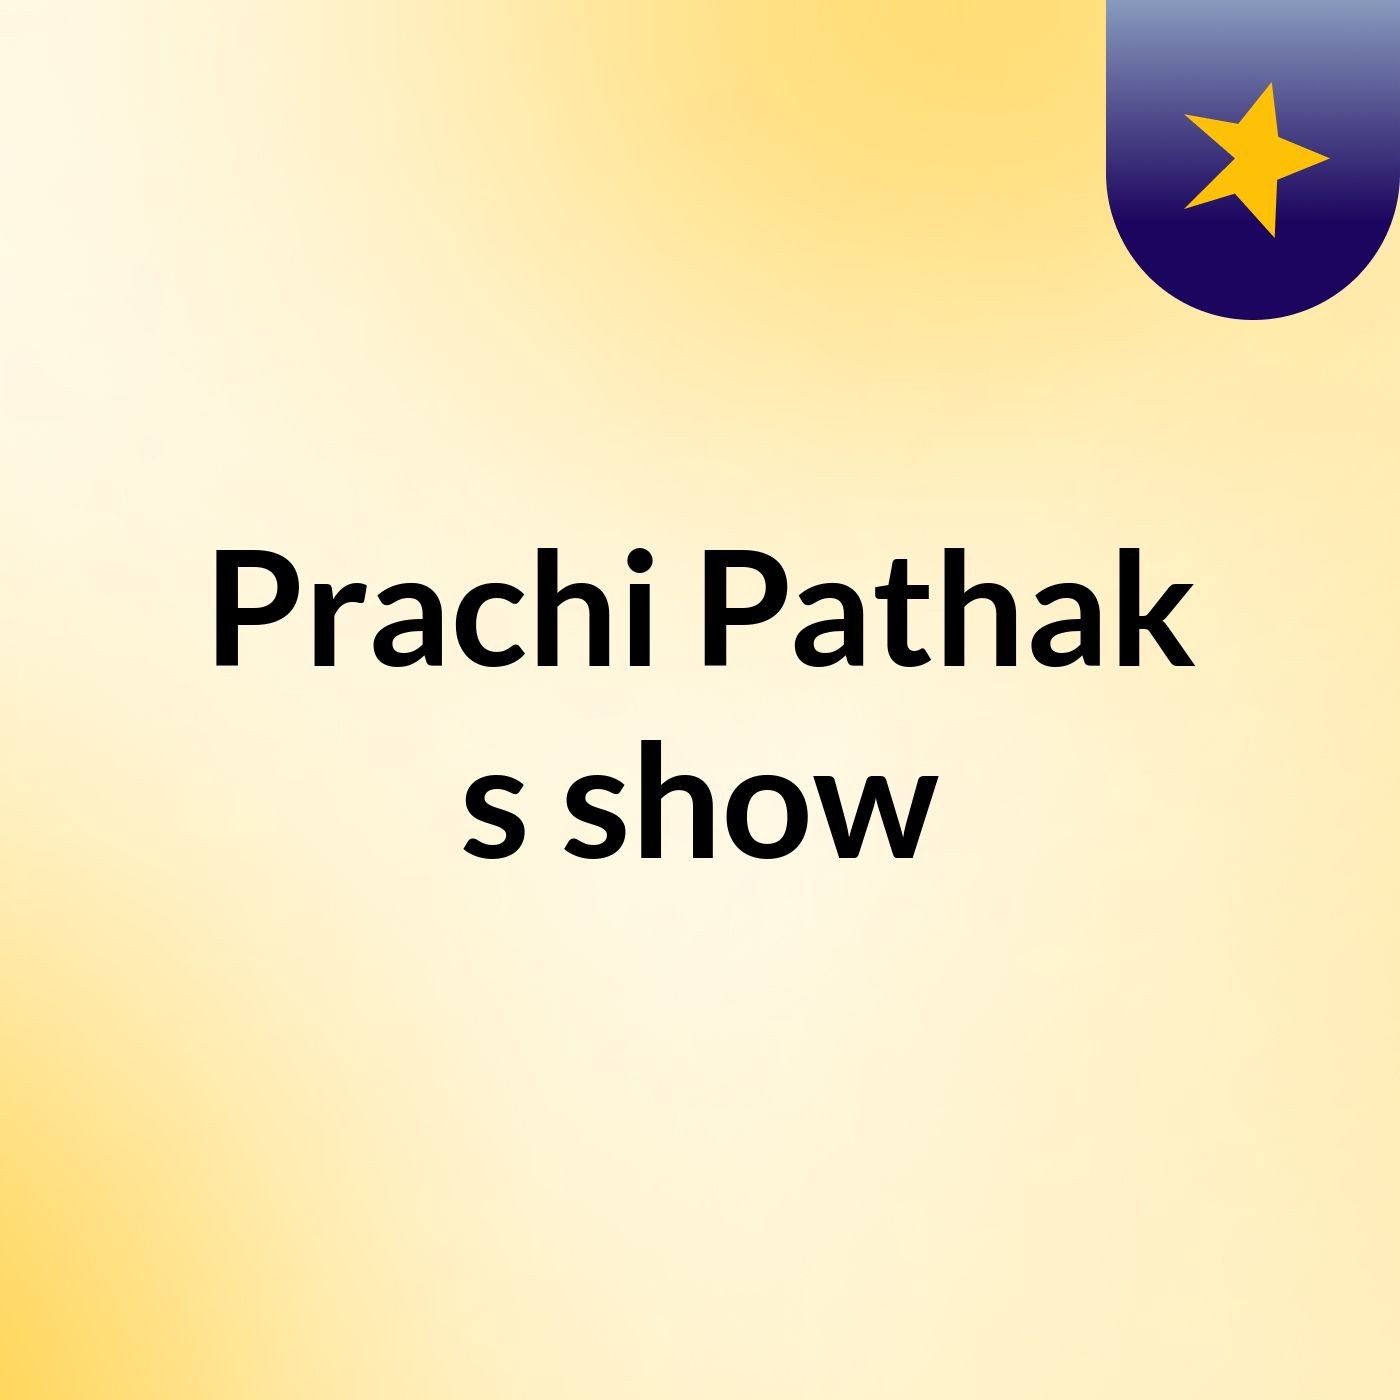 Prachi Pathak's show